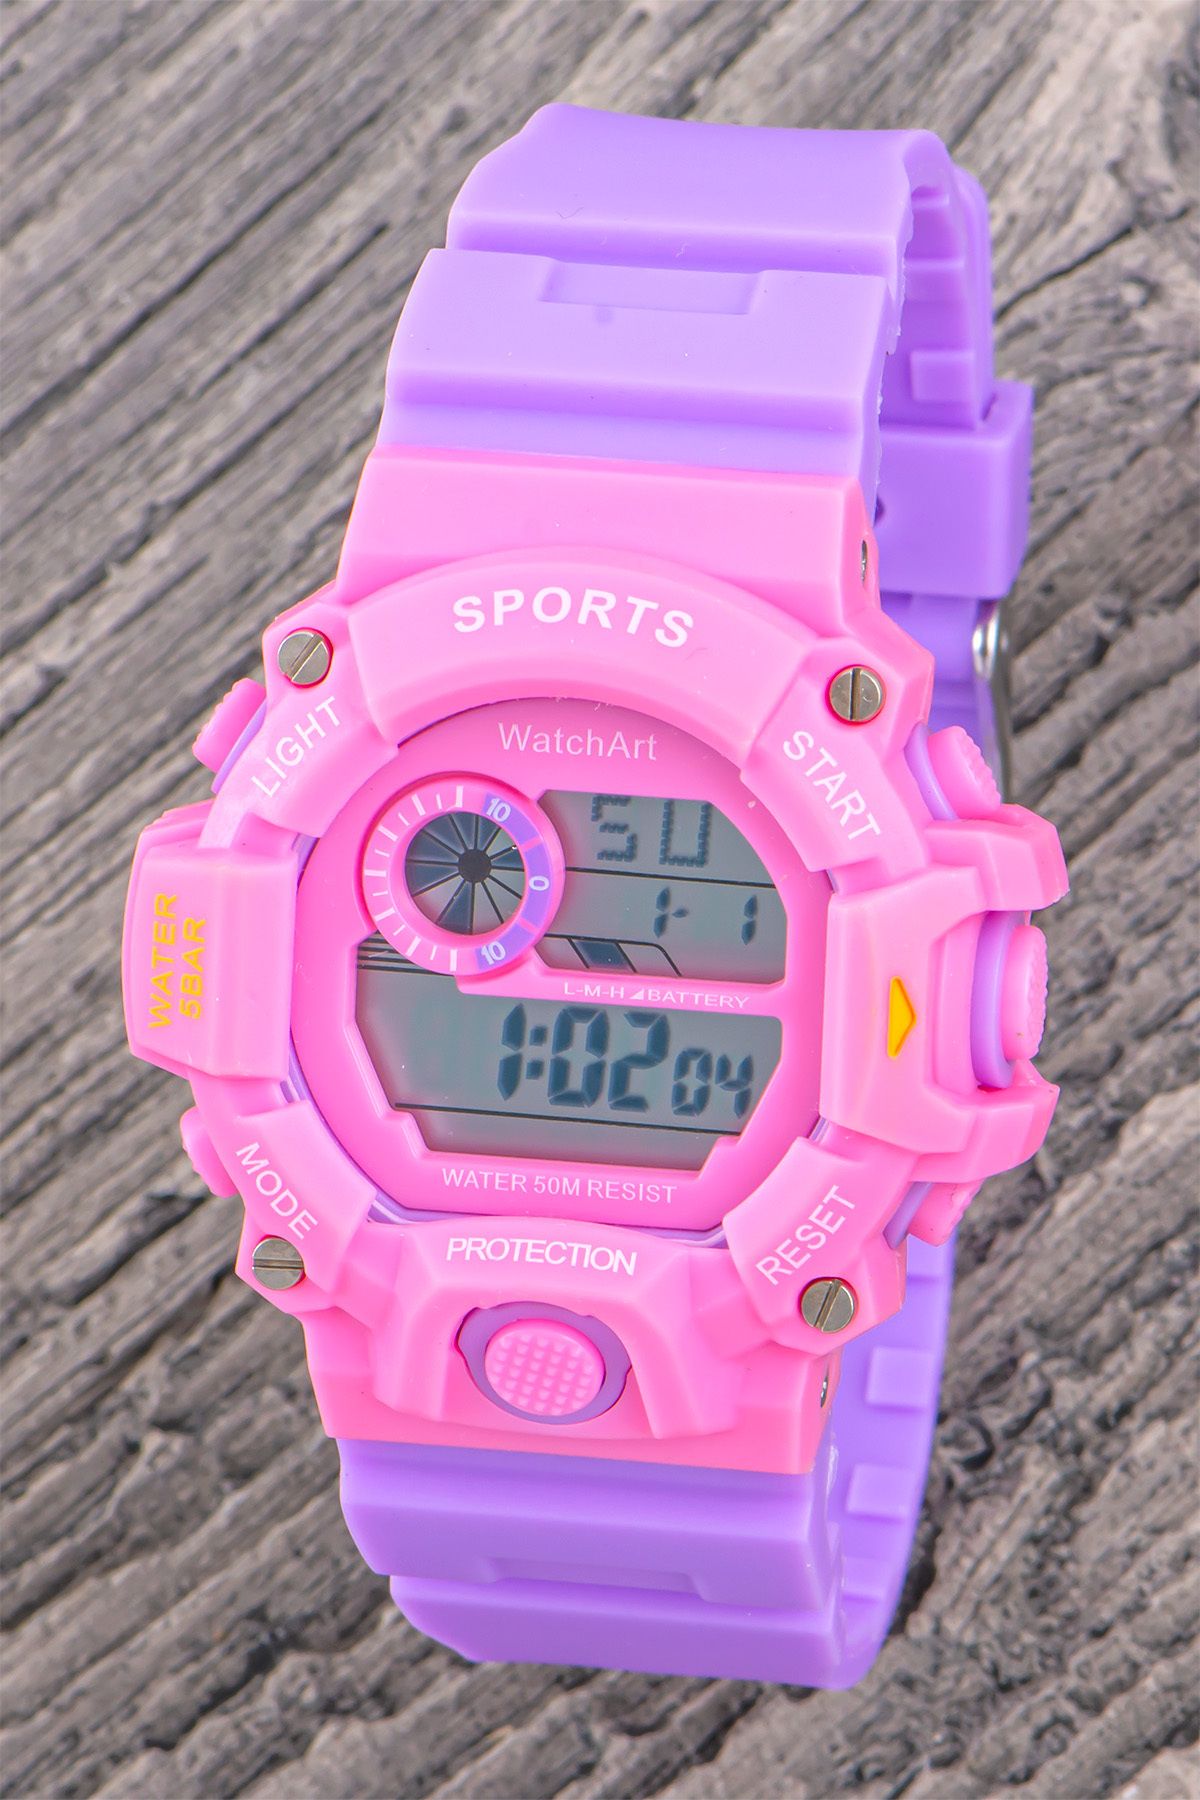 Watchart Pembe Renk Spor Çocuk Kol Saati Dijital Ekran Su Geçirmez Alarm Kronometre Takvim